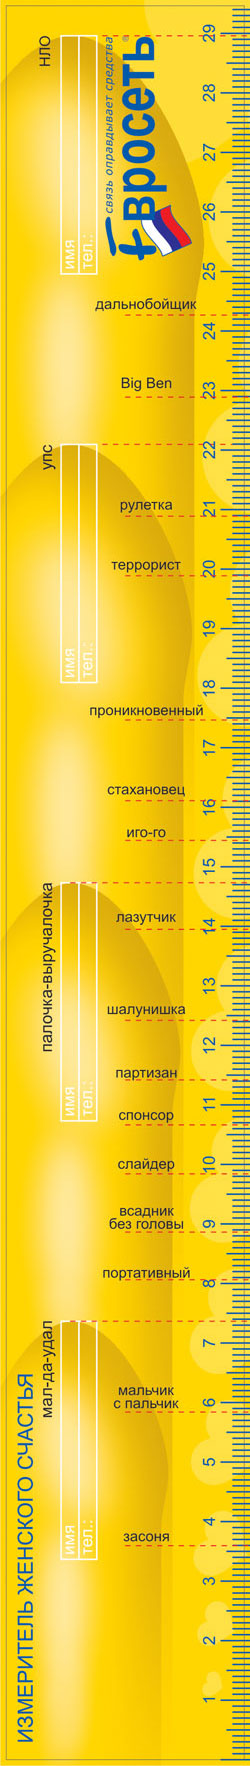 http://ru.fishki.net/picsw/032007/07/ruler/ruler.jpg